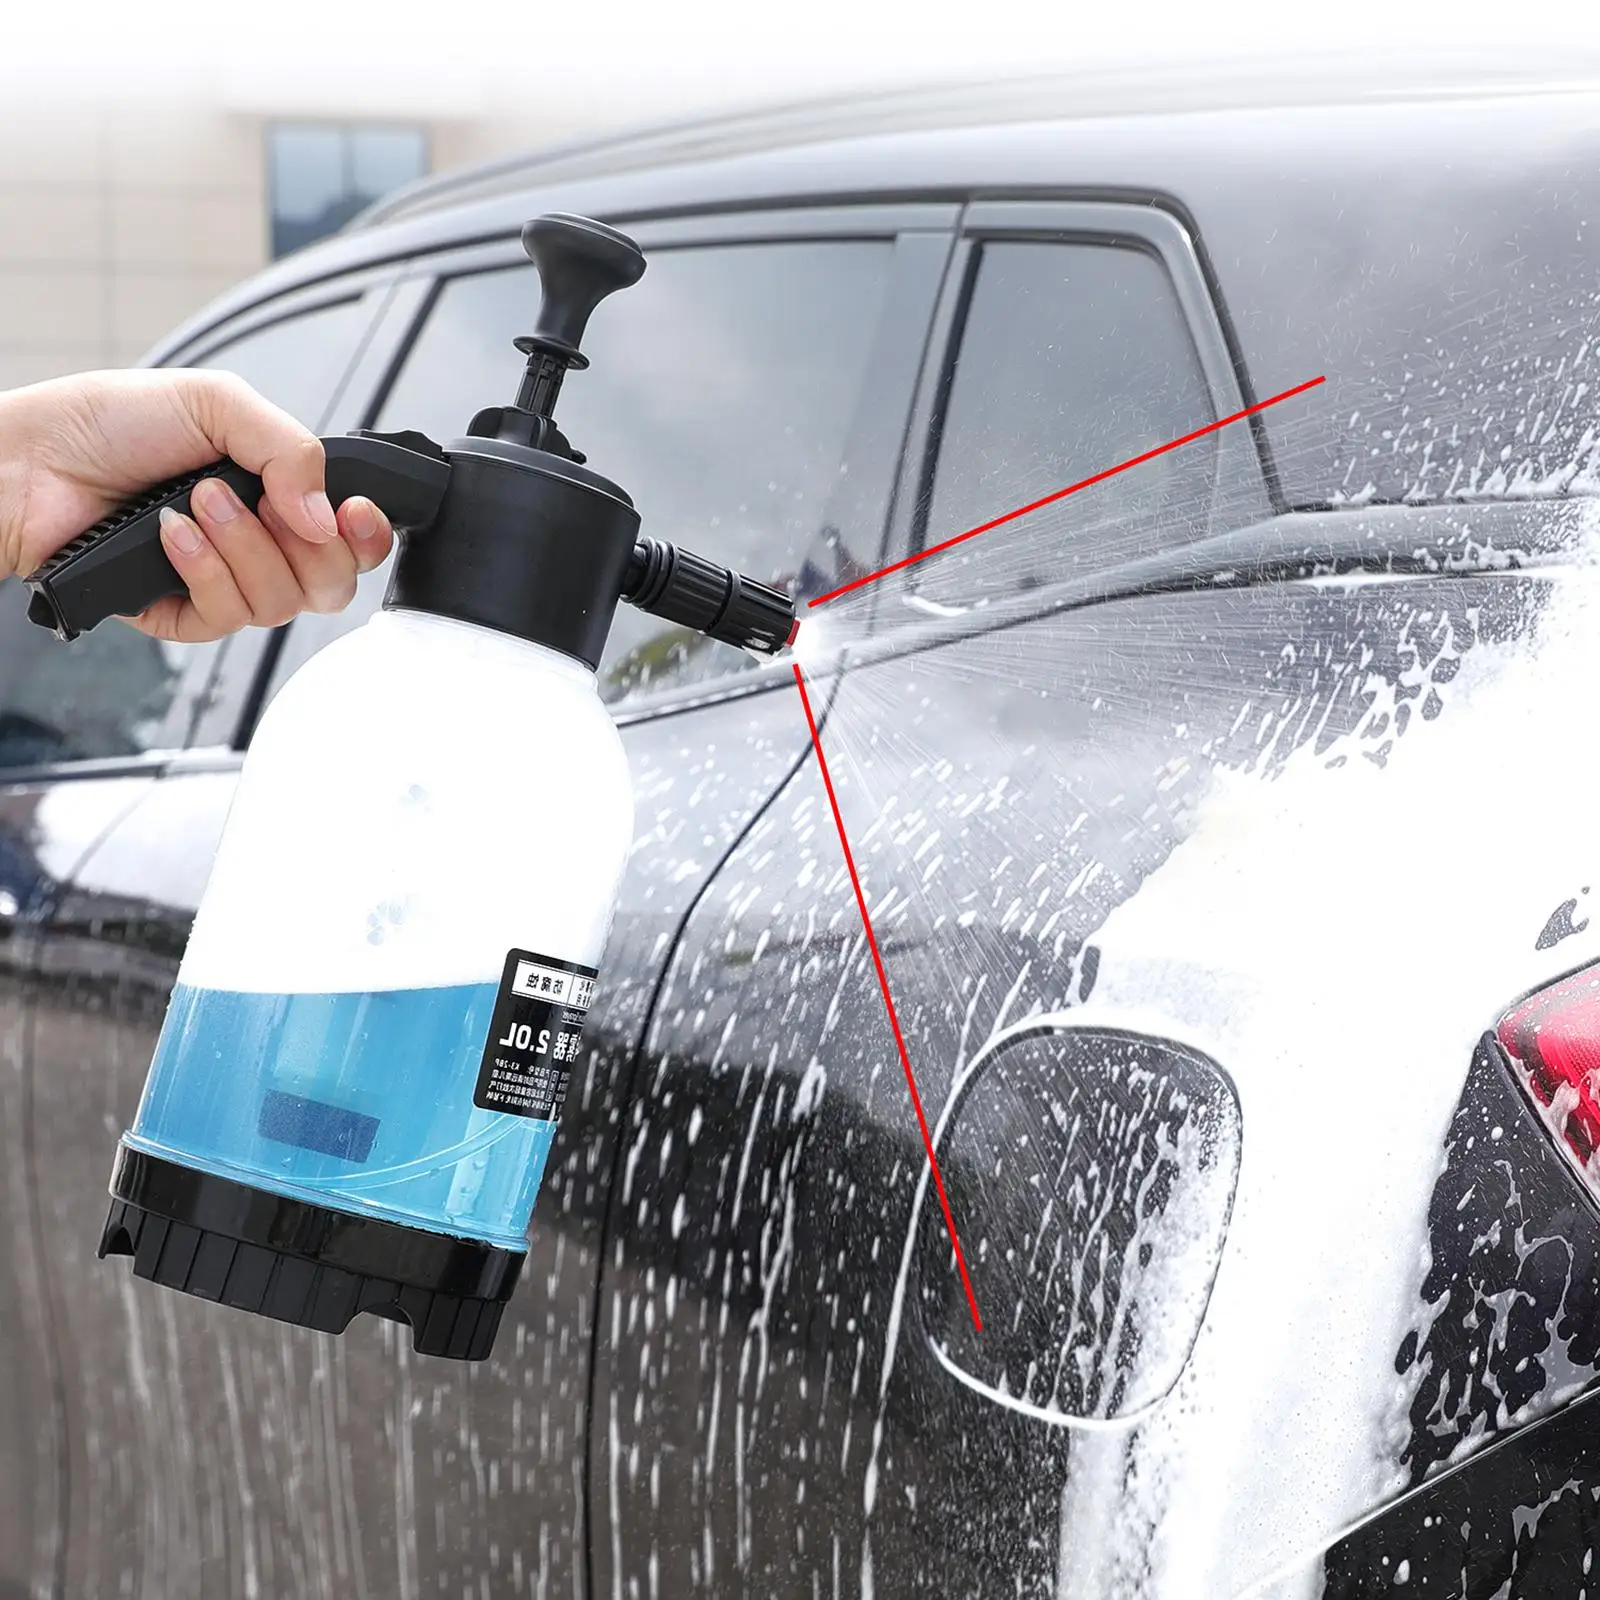 Car Wash Pump Manual Foaming Sprayer Gardening Sprayer for watering Care